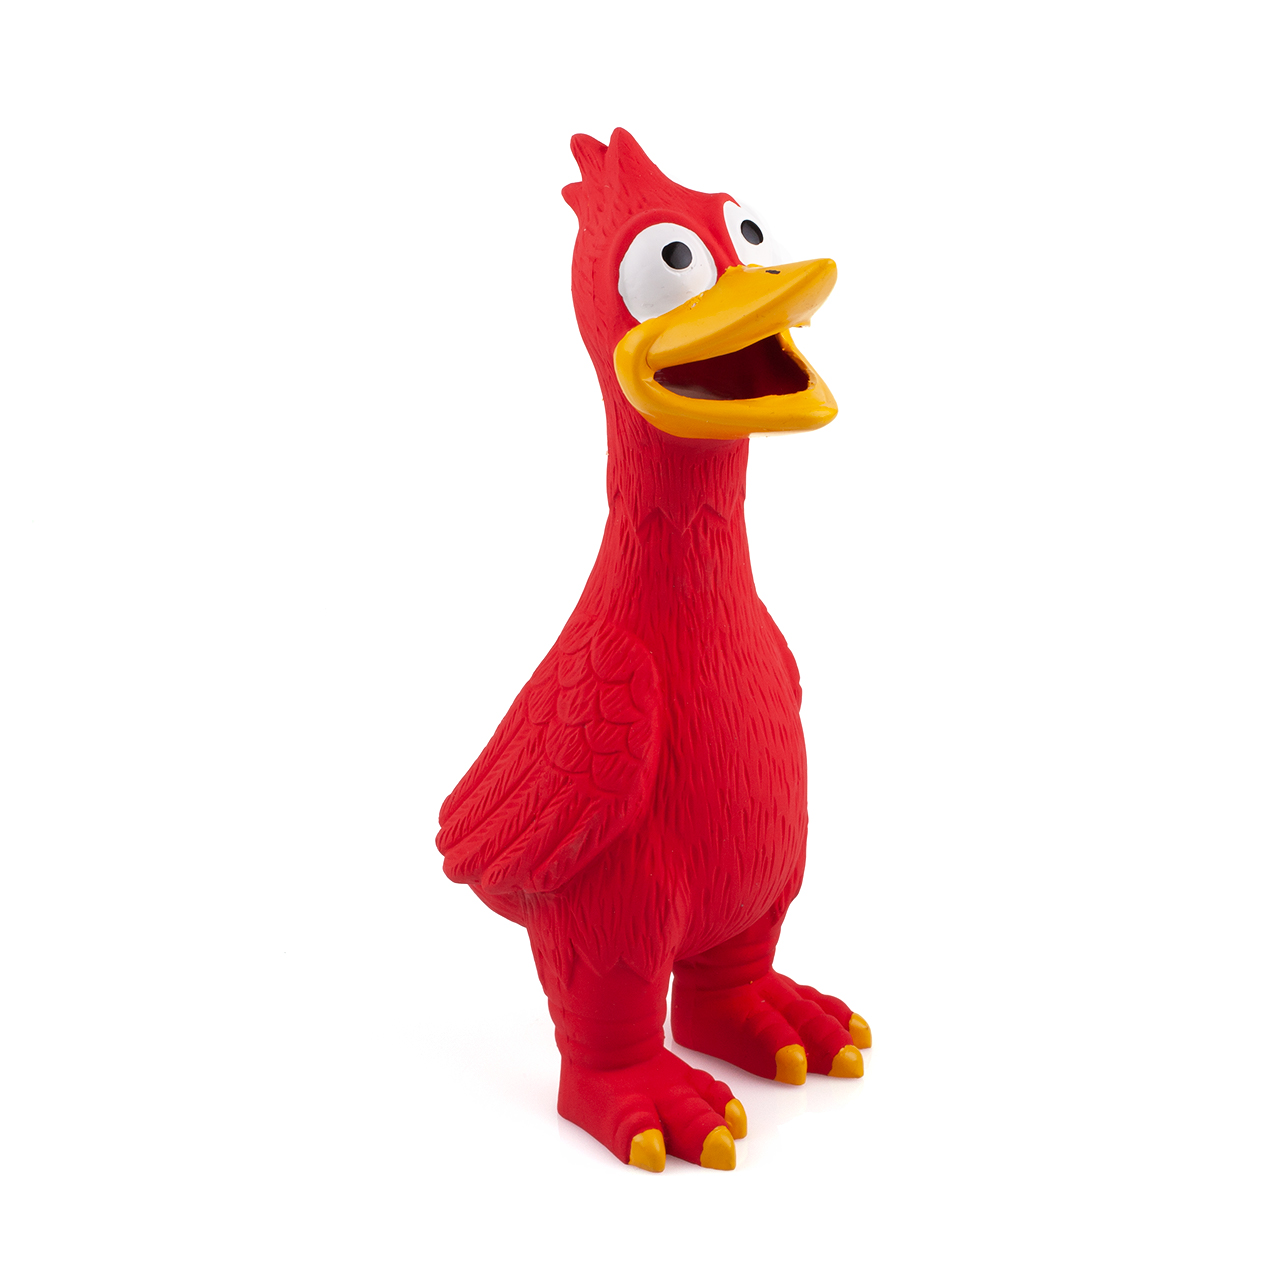 Chiwava 吱吱作响的乳胶狗玩具站立鸡颜色红色